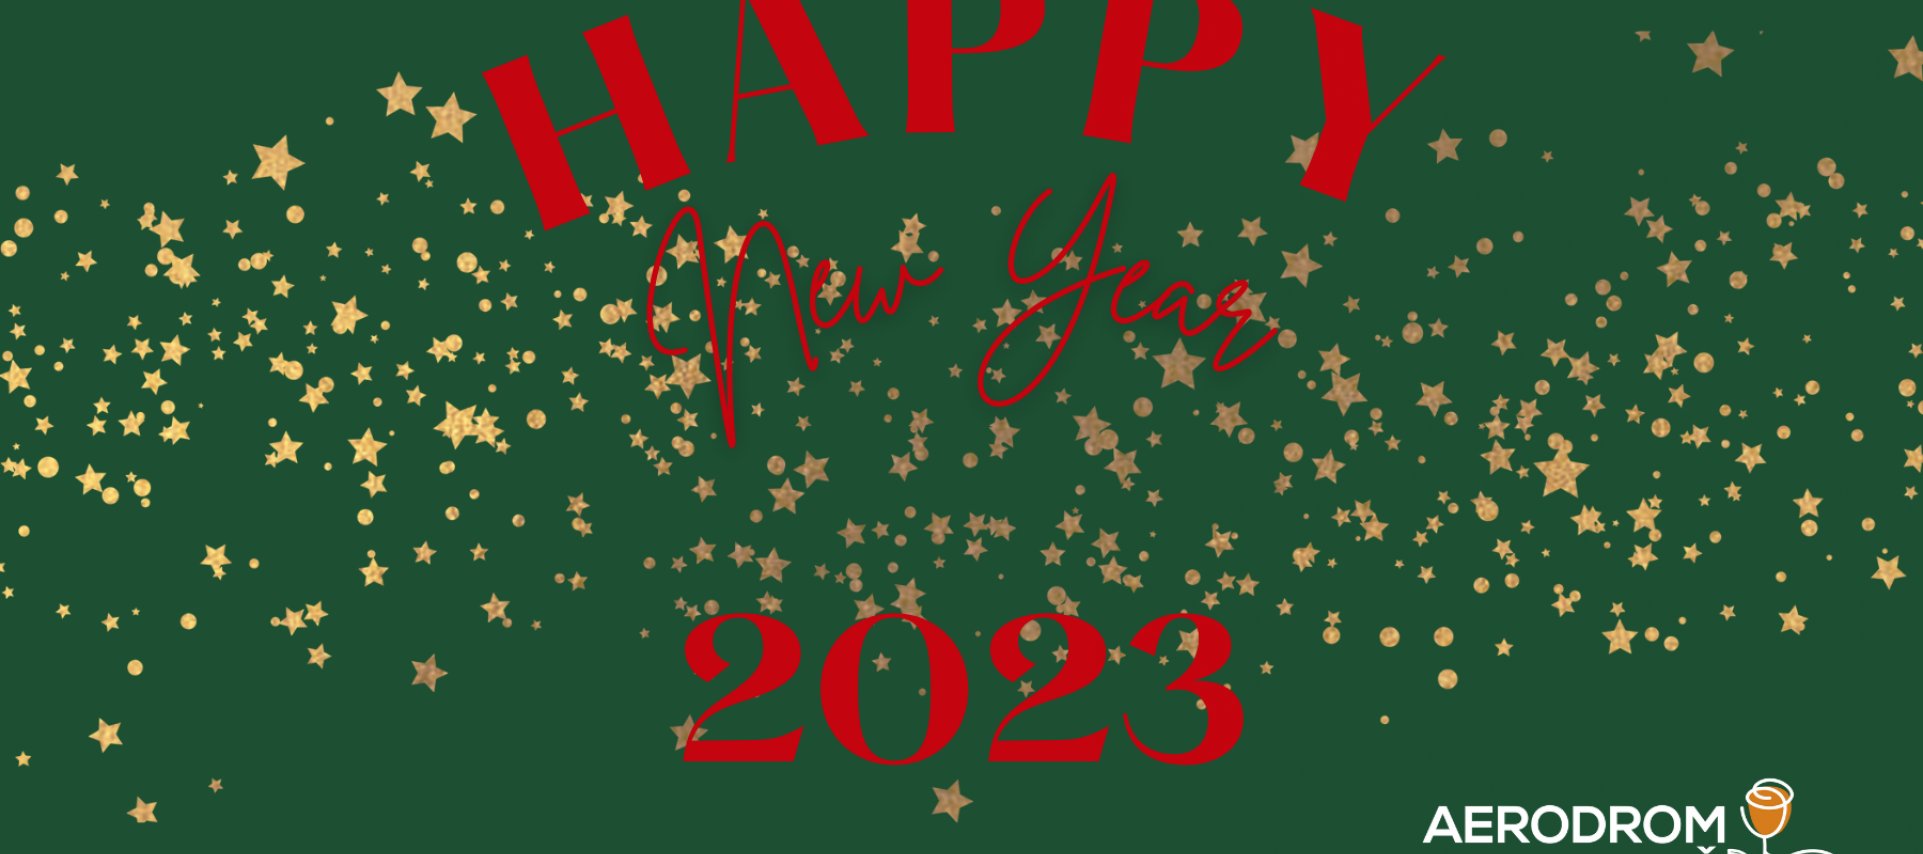 Happy New year 2023!